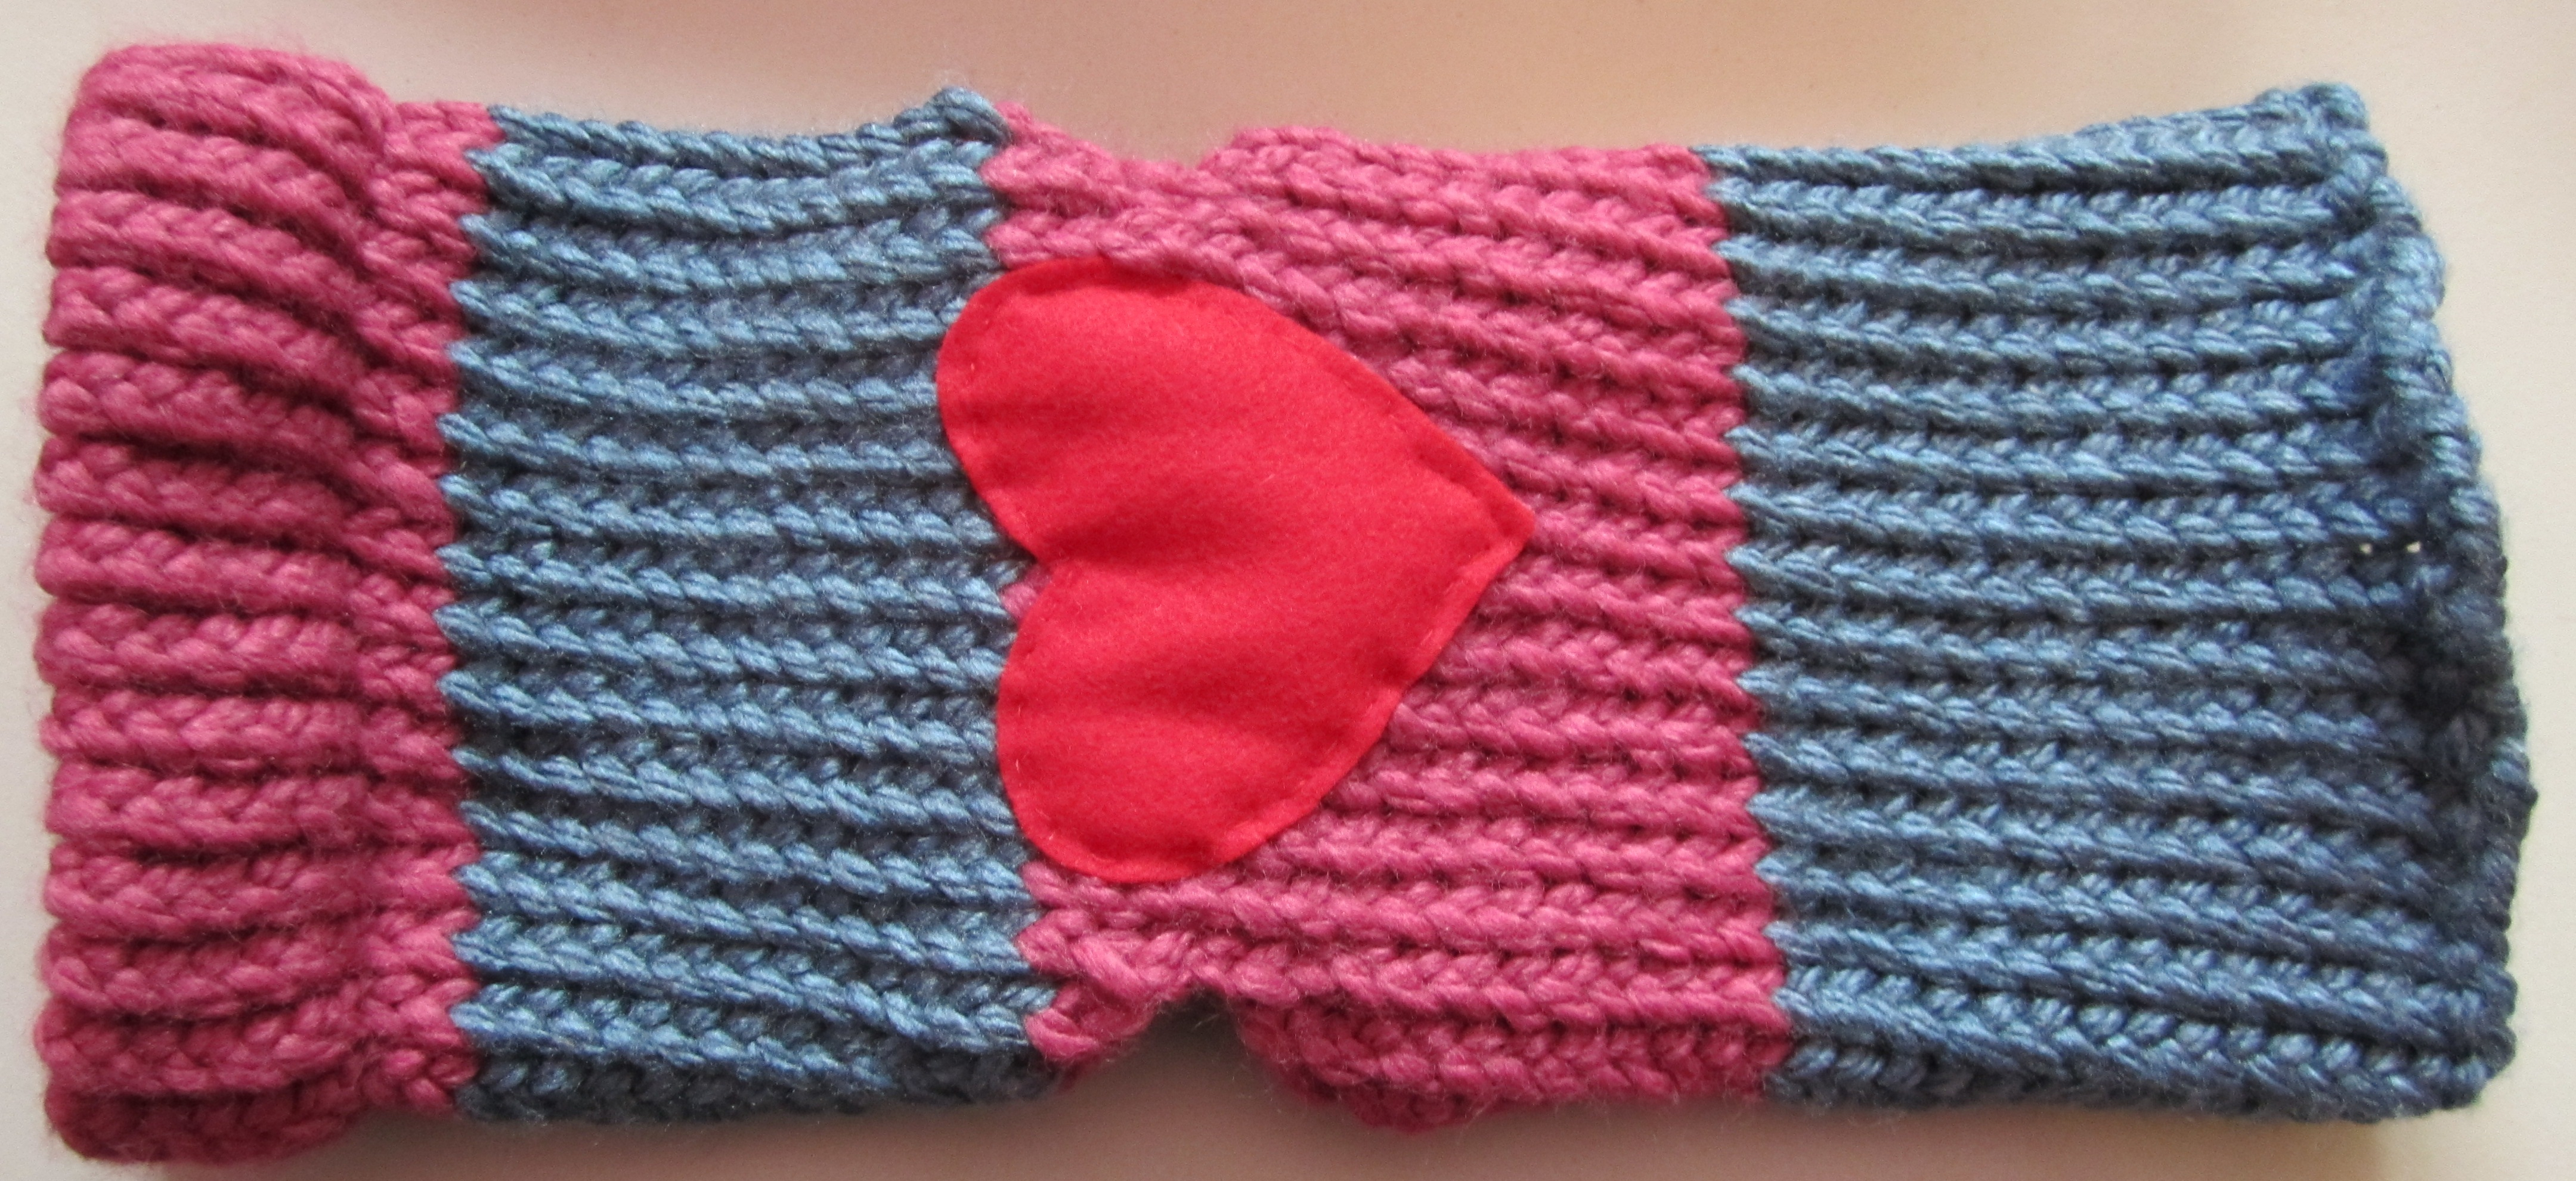 Small Dog Knitting Patterns Loom Knitting Small Dog Sweater Pattern With Videos Azombiefarmer Blog